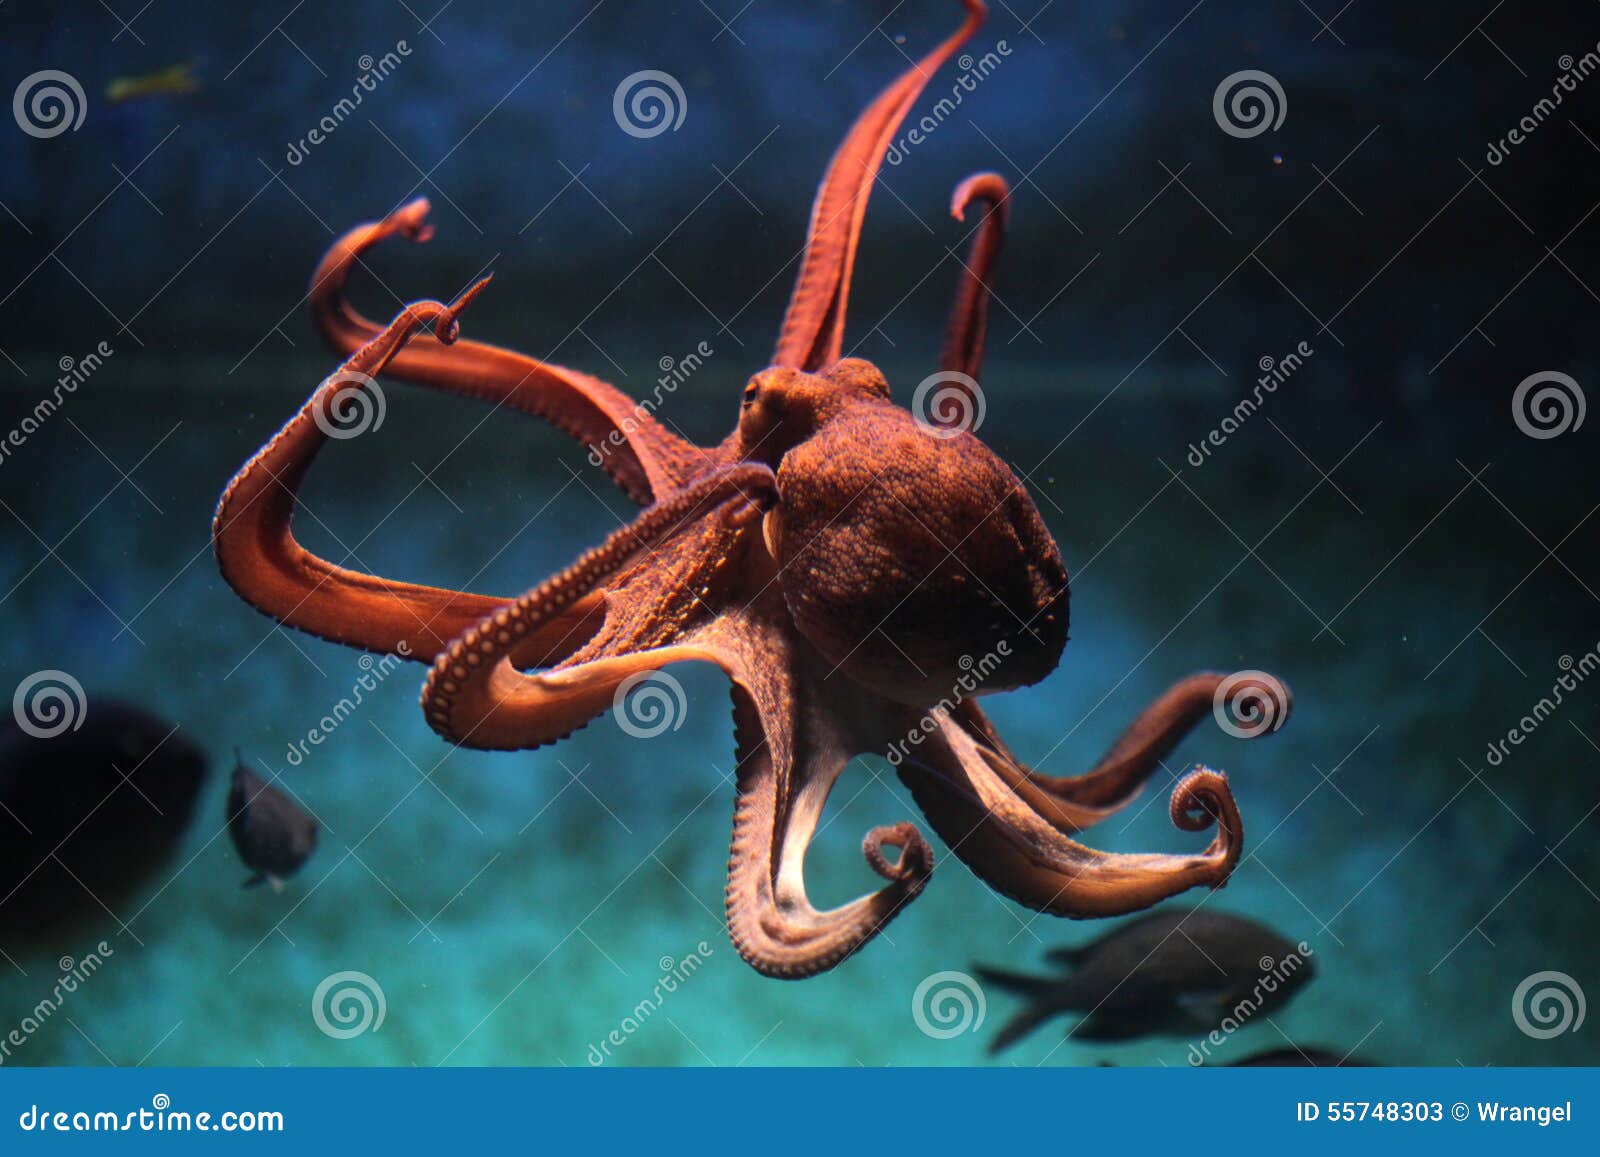 common octopus (octopus vulgaris).